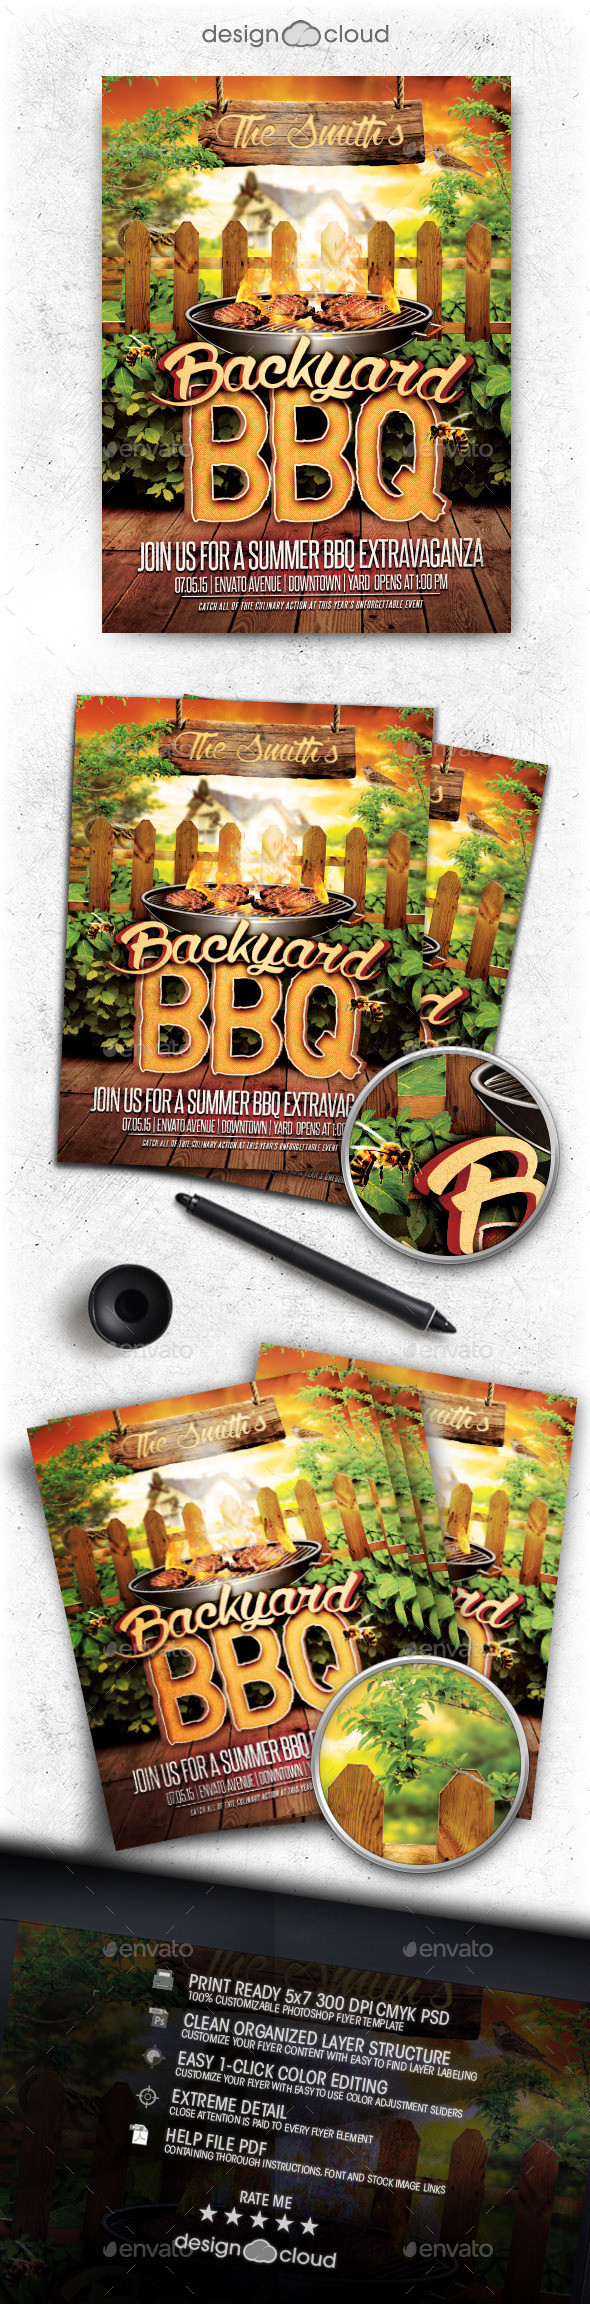 Preview backyard bbq flyer template